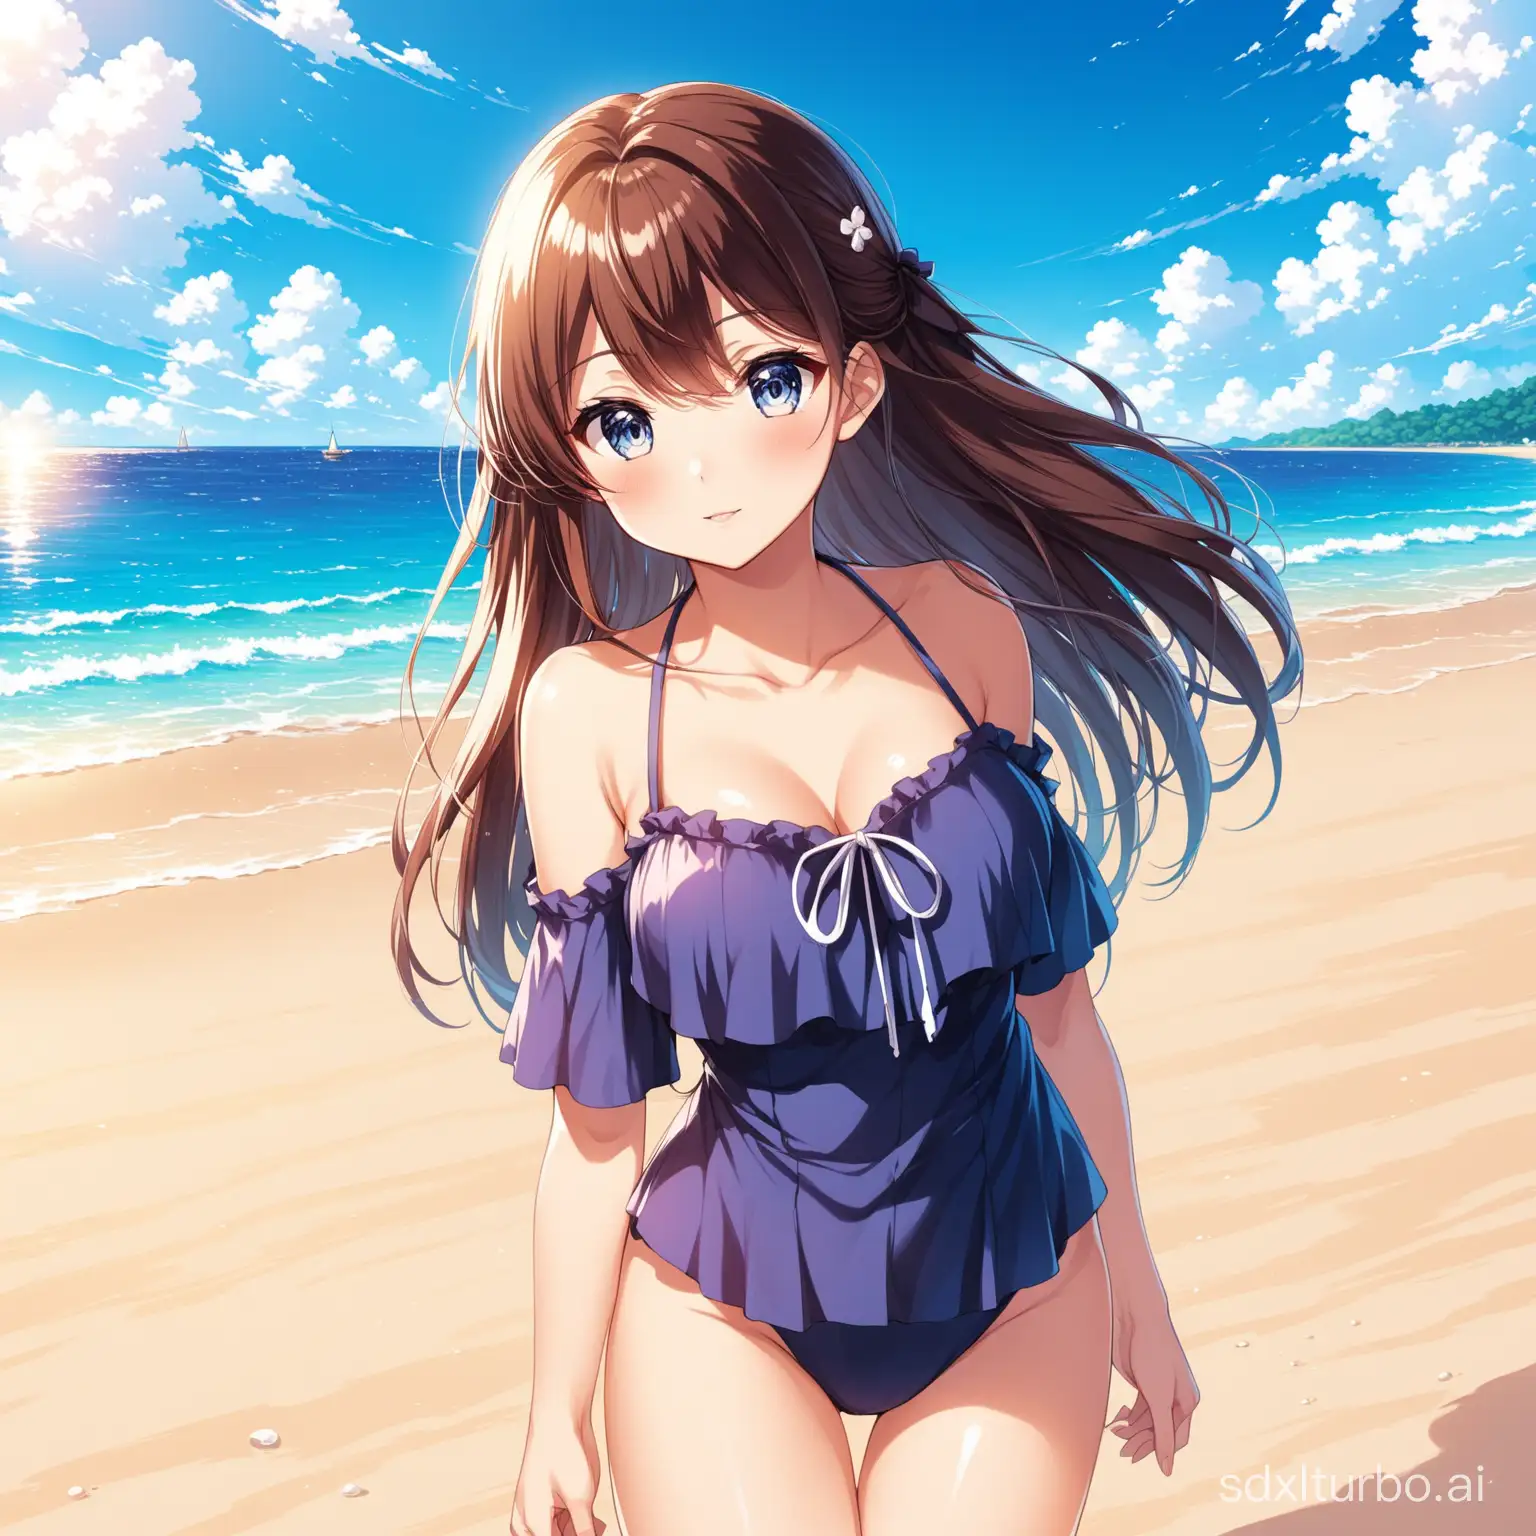 Anime-Girl-Enjoying-Sunny-Day-at-the-Beach